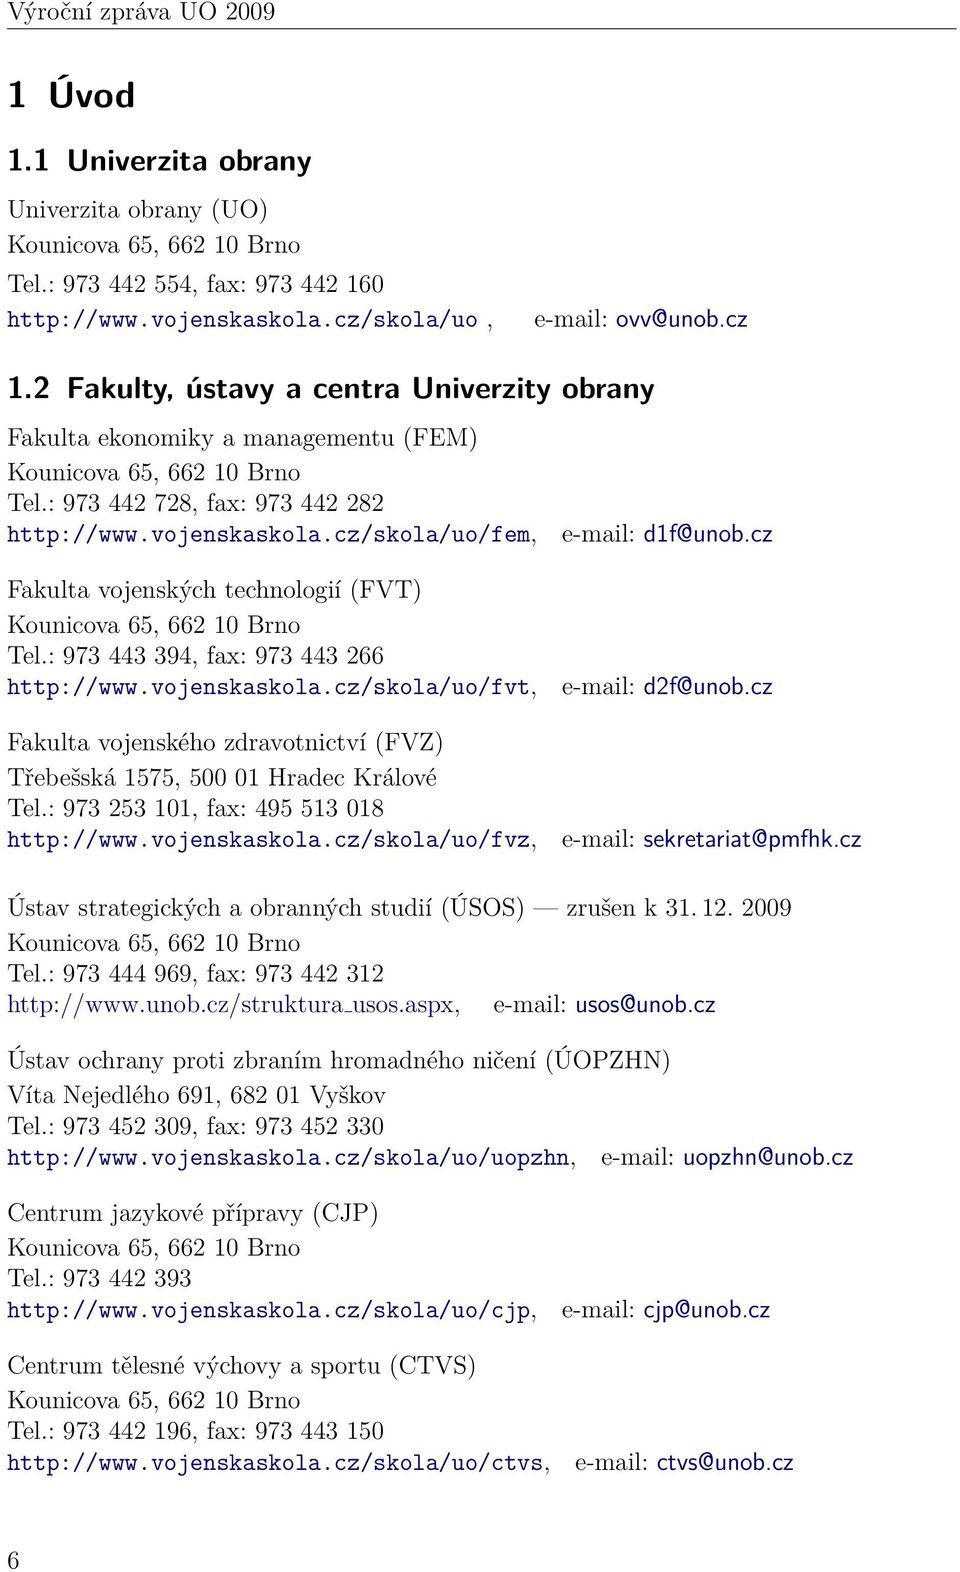 cz/skola/uo/fem, e-mail: d1f@unob.cz Fakulta vojenských technologií (FVT) Kounicova 65, 662 10 Brno Tel.: 973 443 394, fax: 973 443 266 http://www.vojenskaskola.